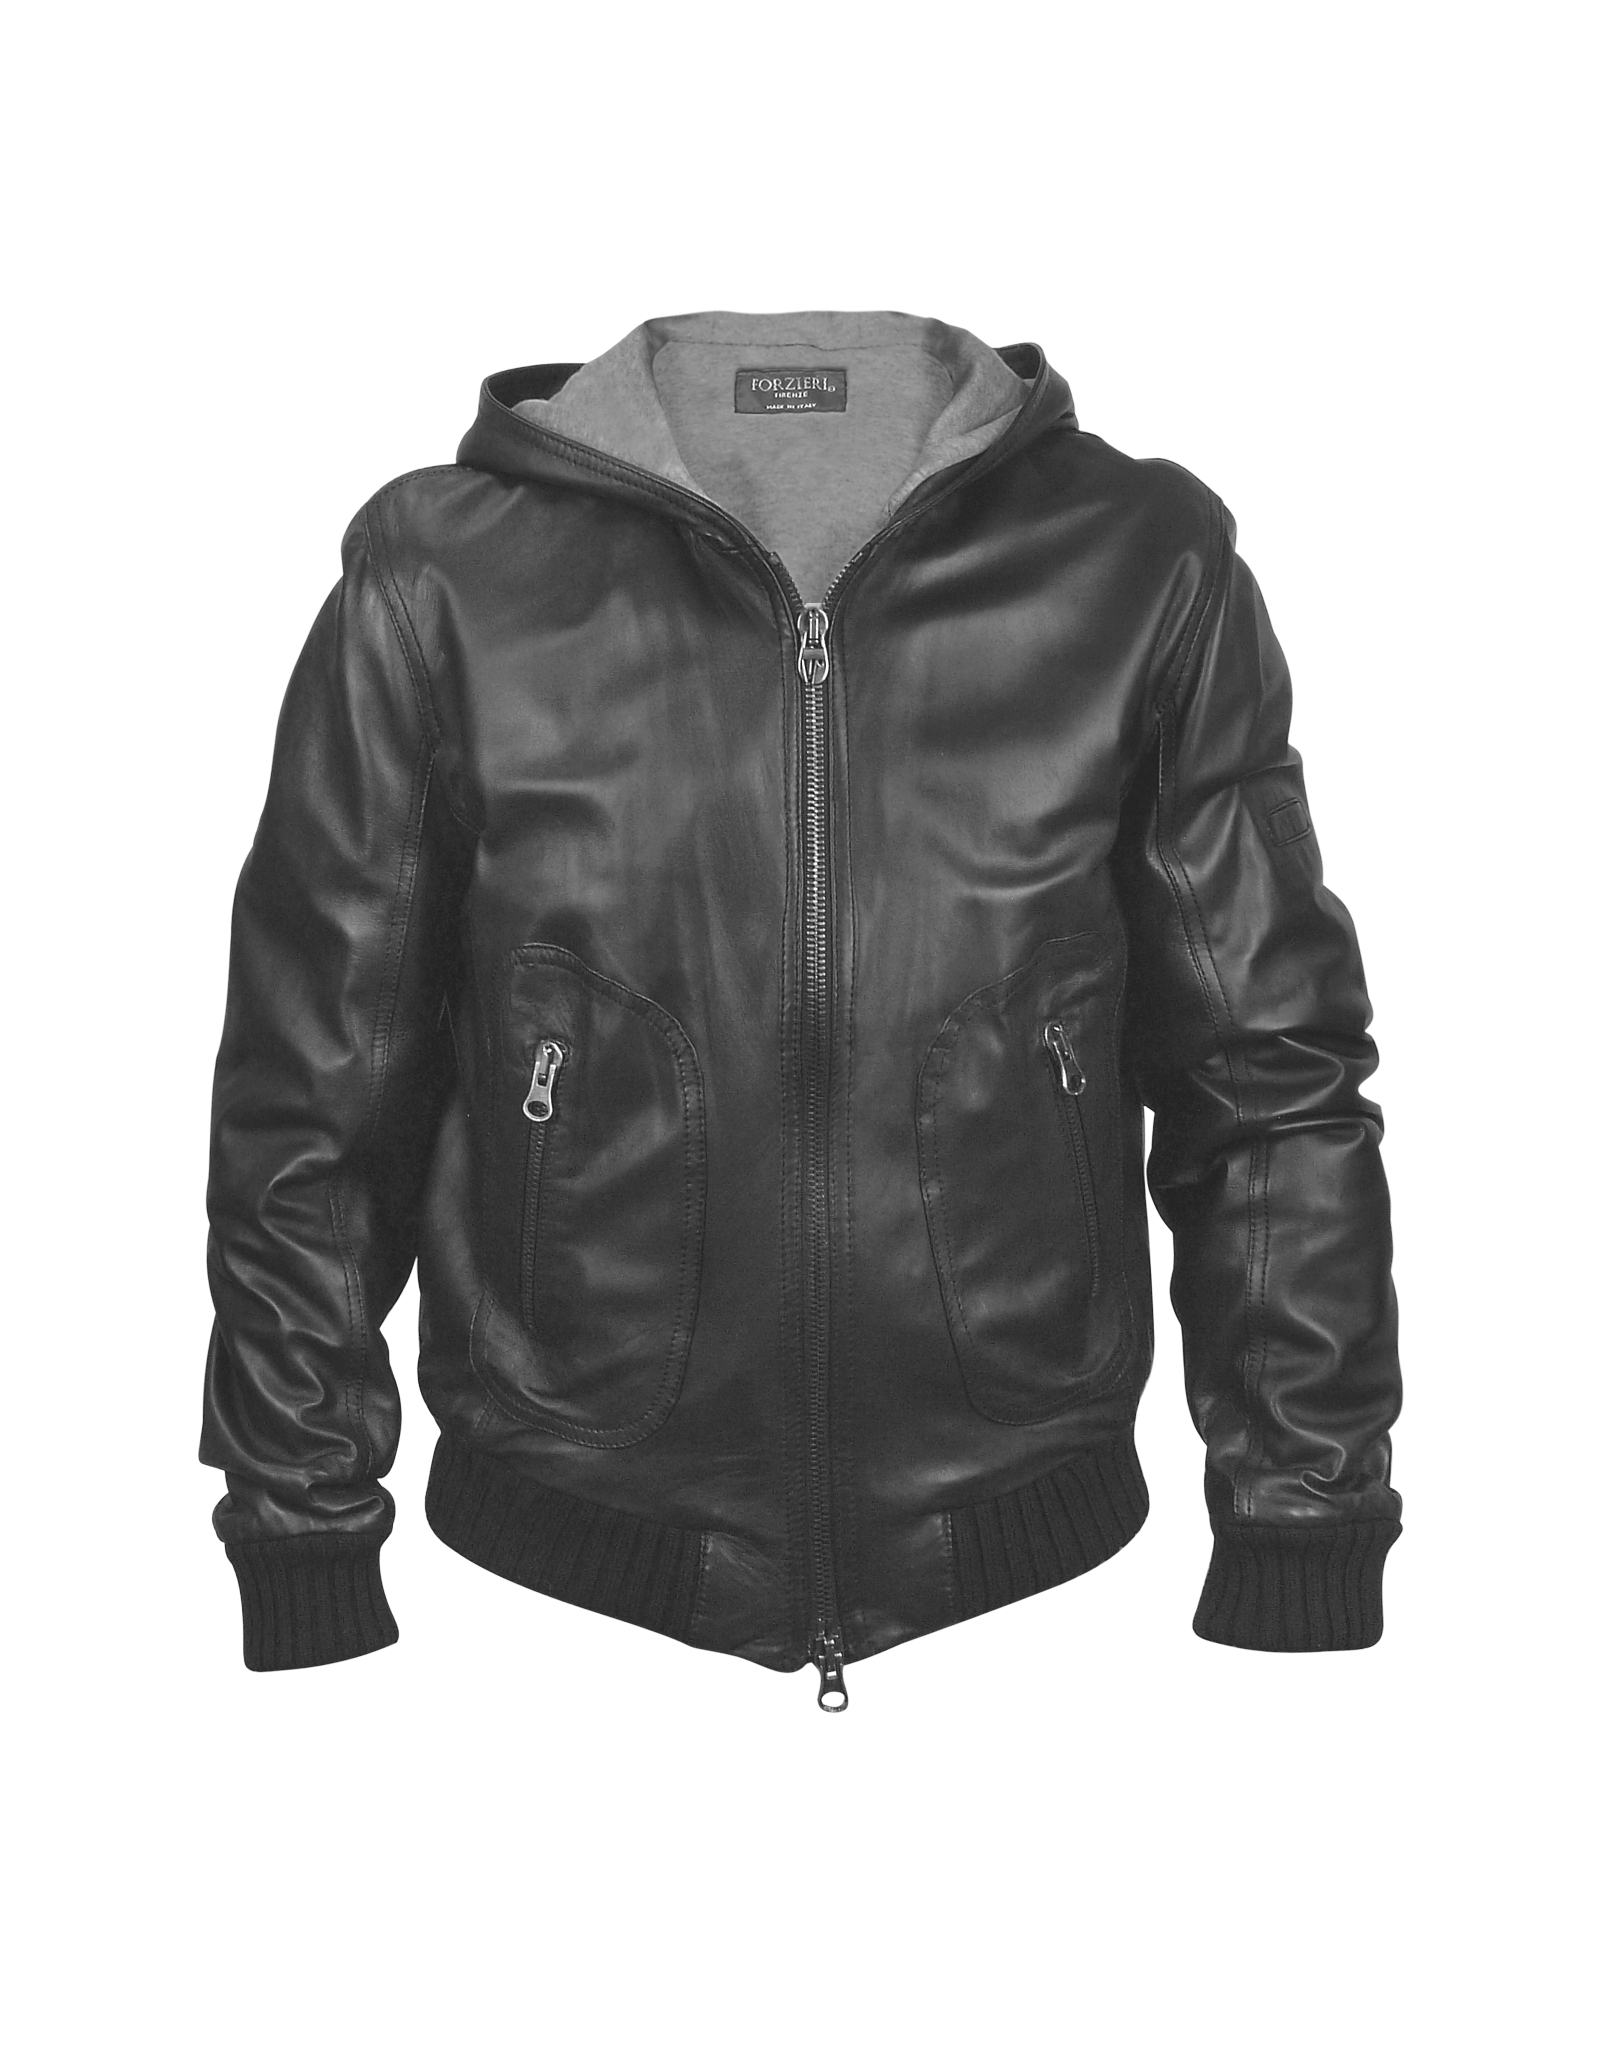 Lyst - Forzieri Men's Black Leather Hooded Jacket in Black for Men